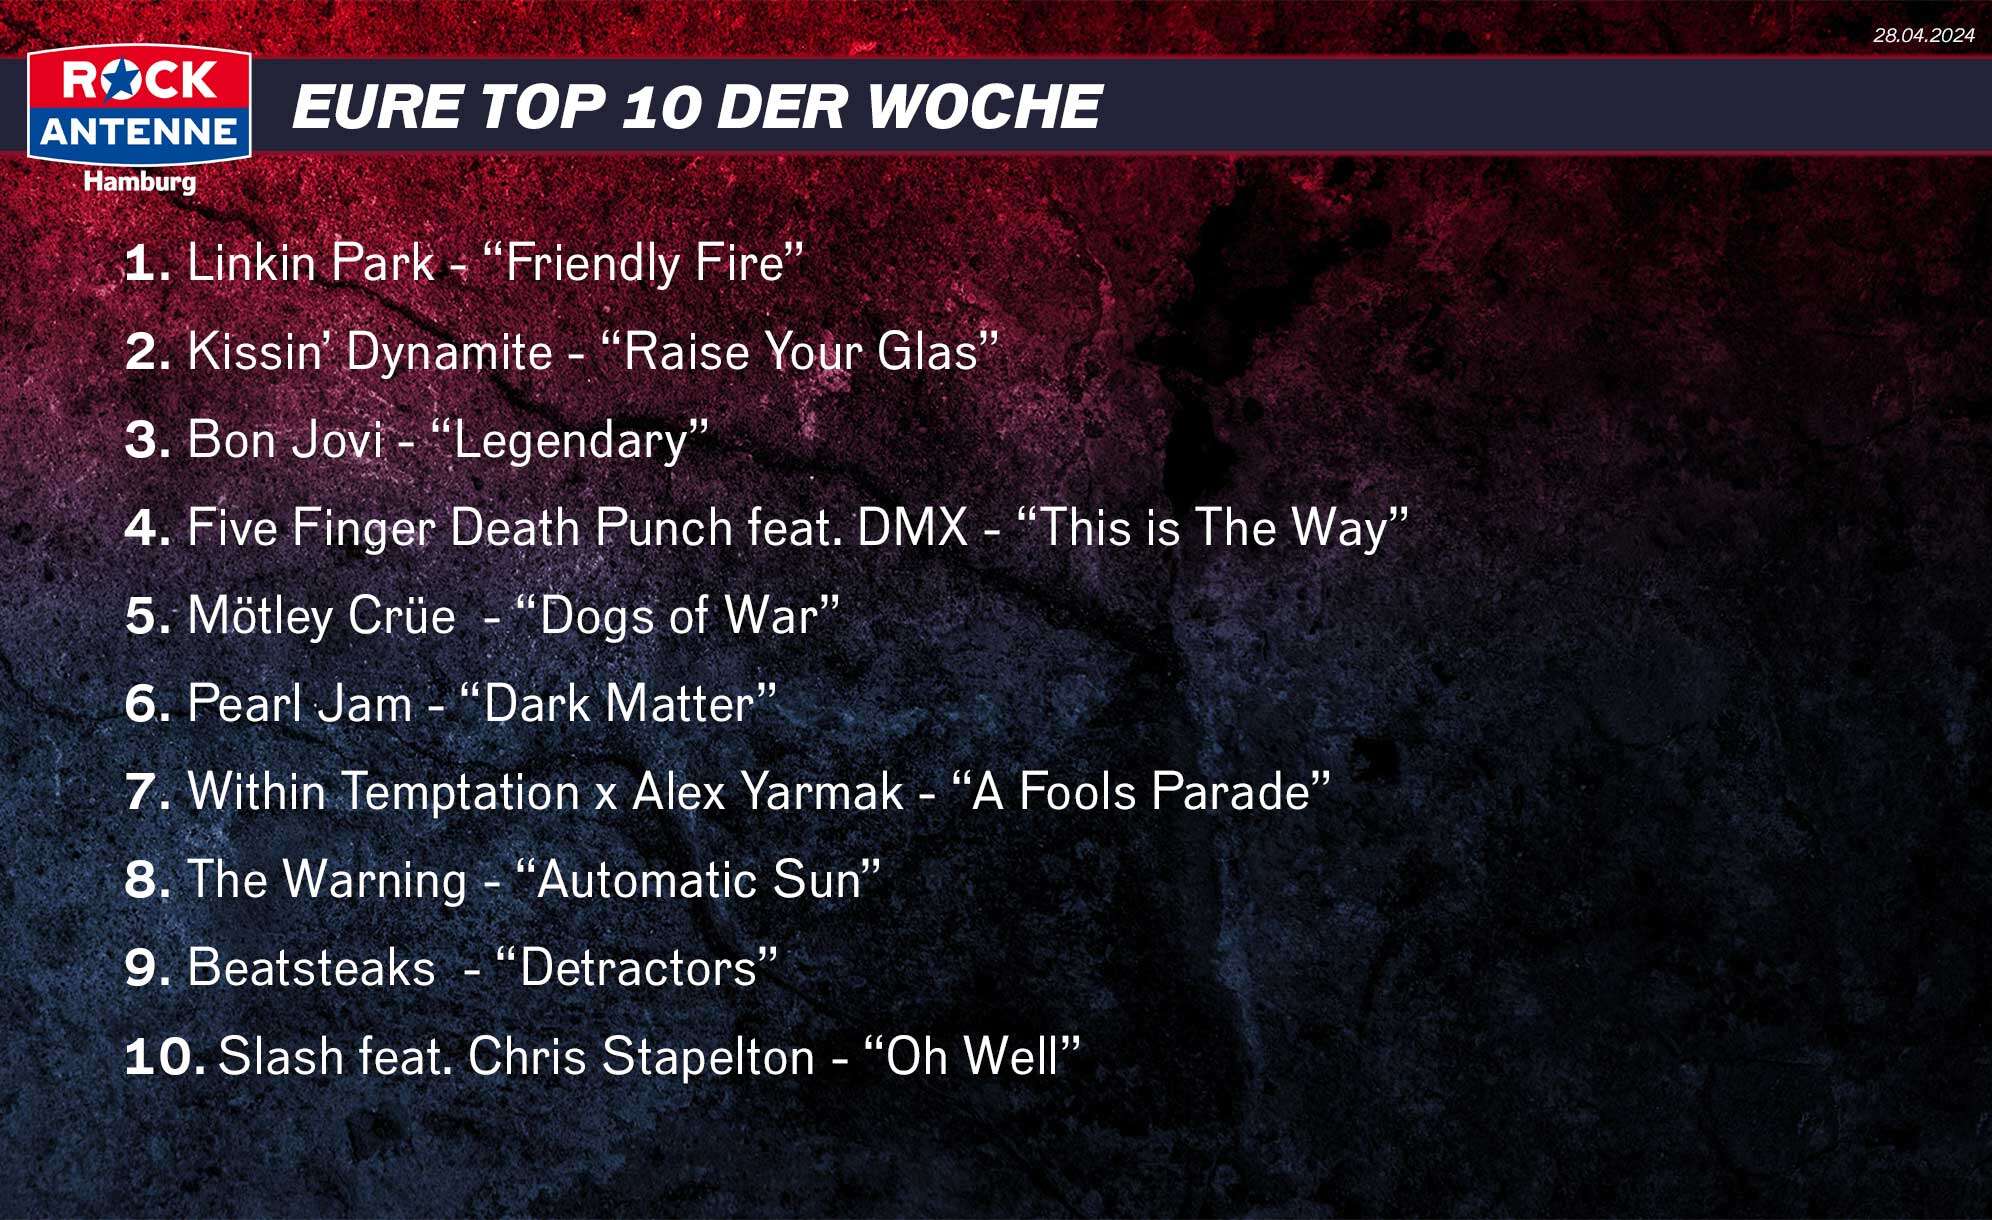 Die Top Ten der Woche vom 12.05.2024 lautet: 1. Linkin Park - “Friendly Fire” 2. Kissin’ Dynamite - “Raise Your Glas” 3. Bon Jovi - “Legendary” 4. Five Finger Death Punch feat. DMX - “This is The Way” 5. Mötley Crüe  - “Dogs of War” 6. Pearl Jam - “Dark Matter” 7. Within Temptation x Alex Yarmak - “A Fools Parade” 8. The Warning - “Automatic Sun” 9. Beatsteaks  - “Detractors” 10. Slash feat. Chris Stapelton - “Oh Well”